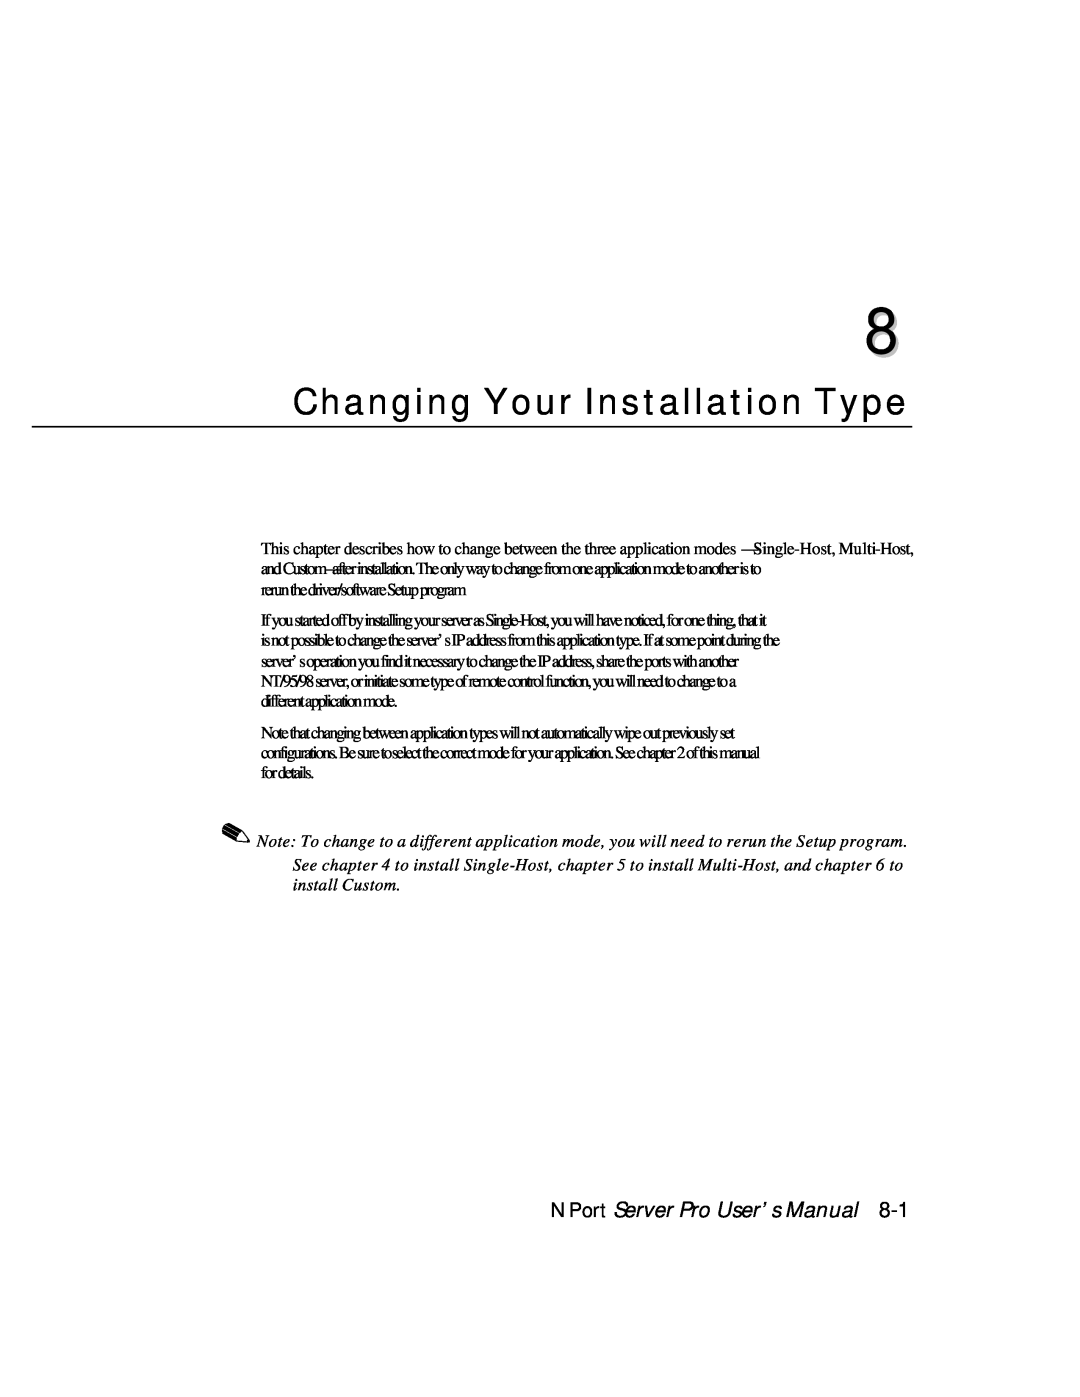 Moxa Technologies DE-308, DE-303 manual Changing Your Installation Type, NPort Server Pro User’s Manual 